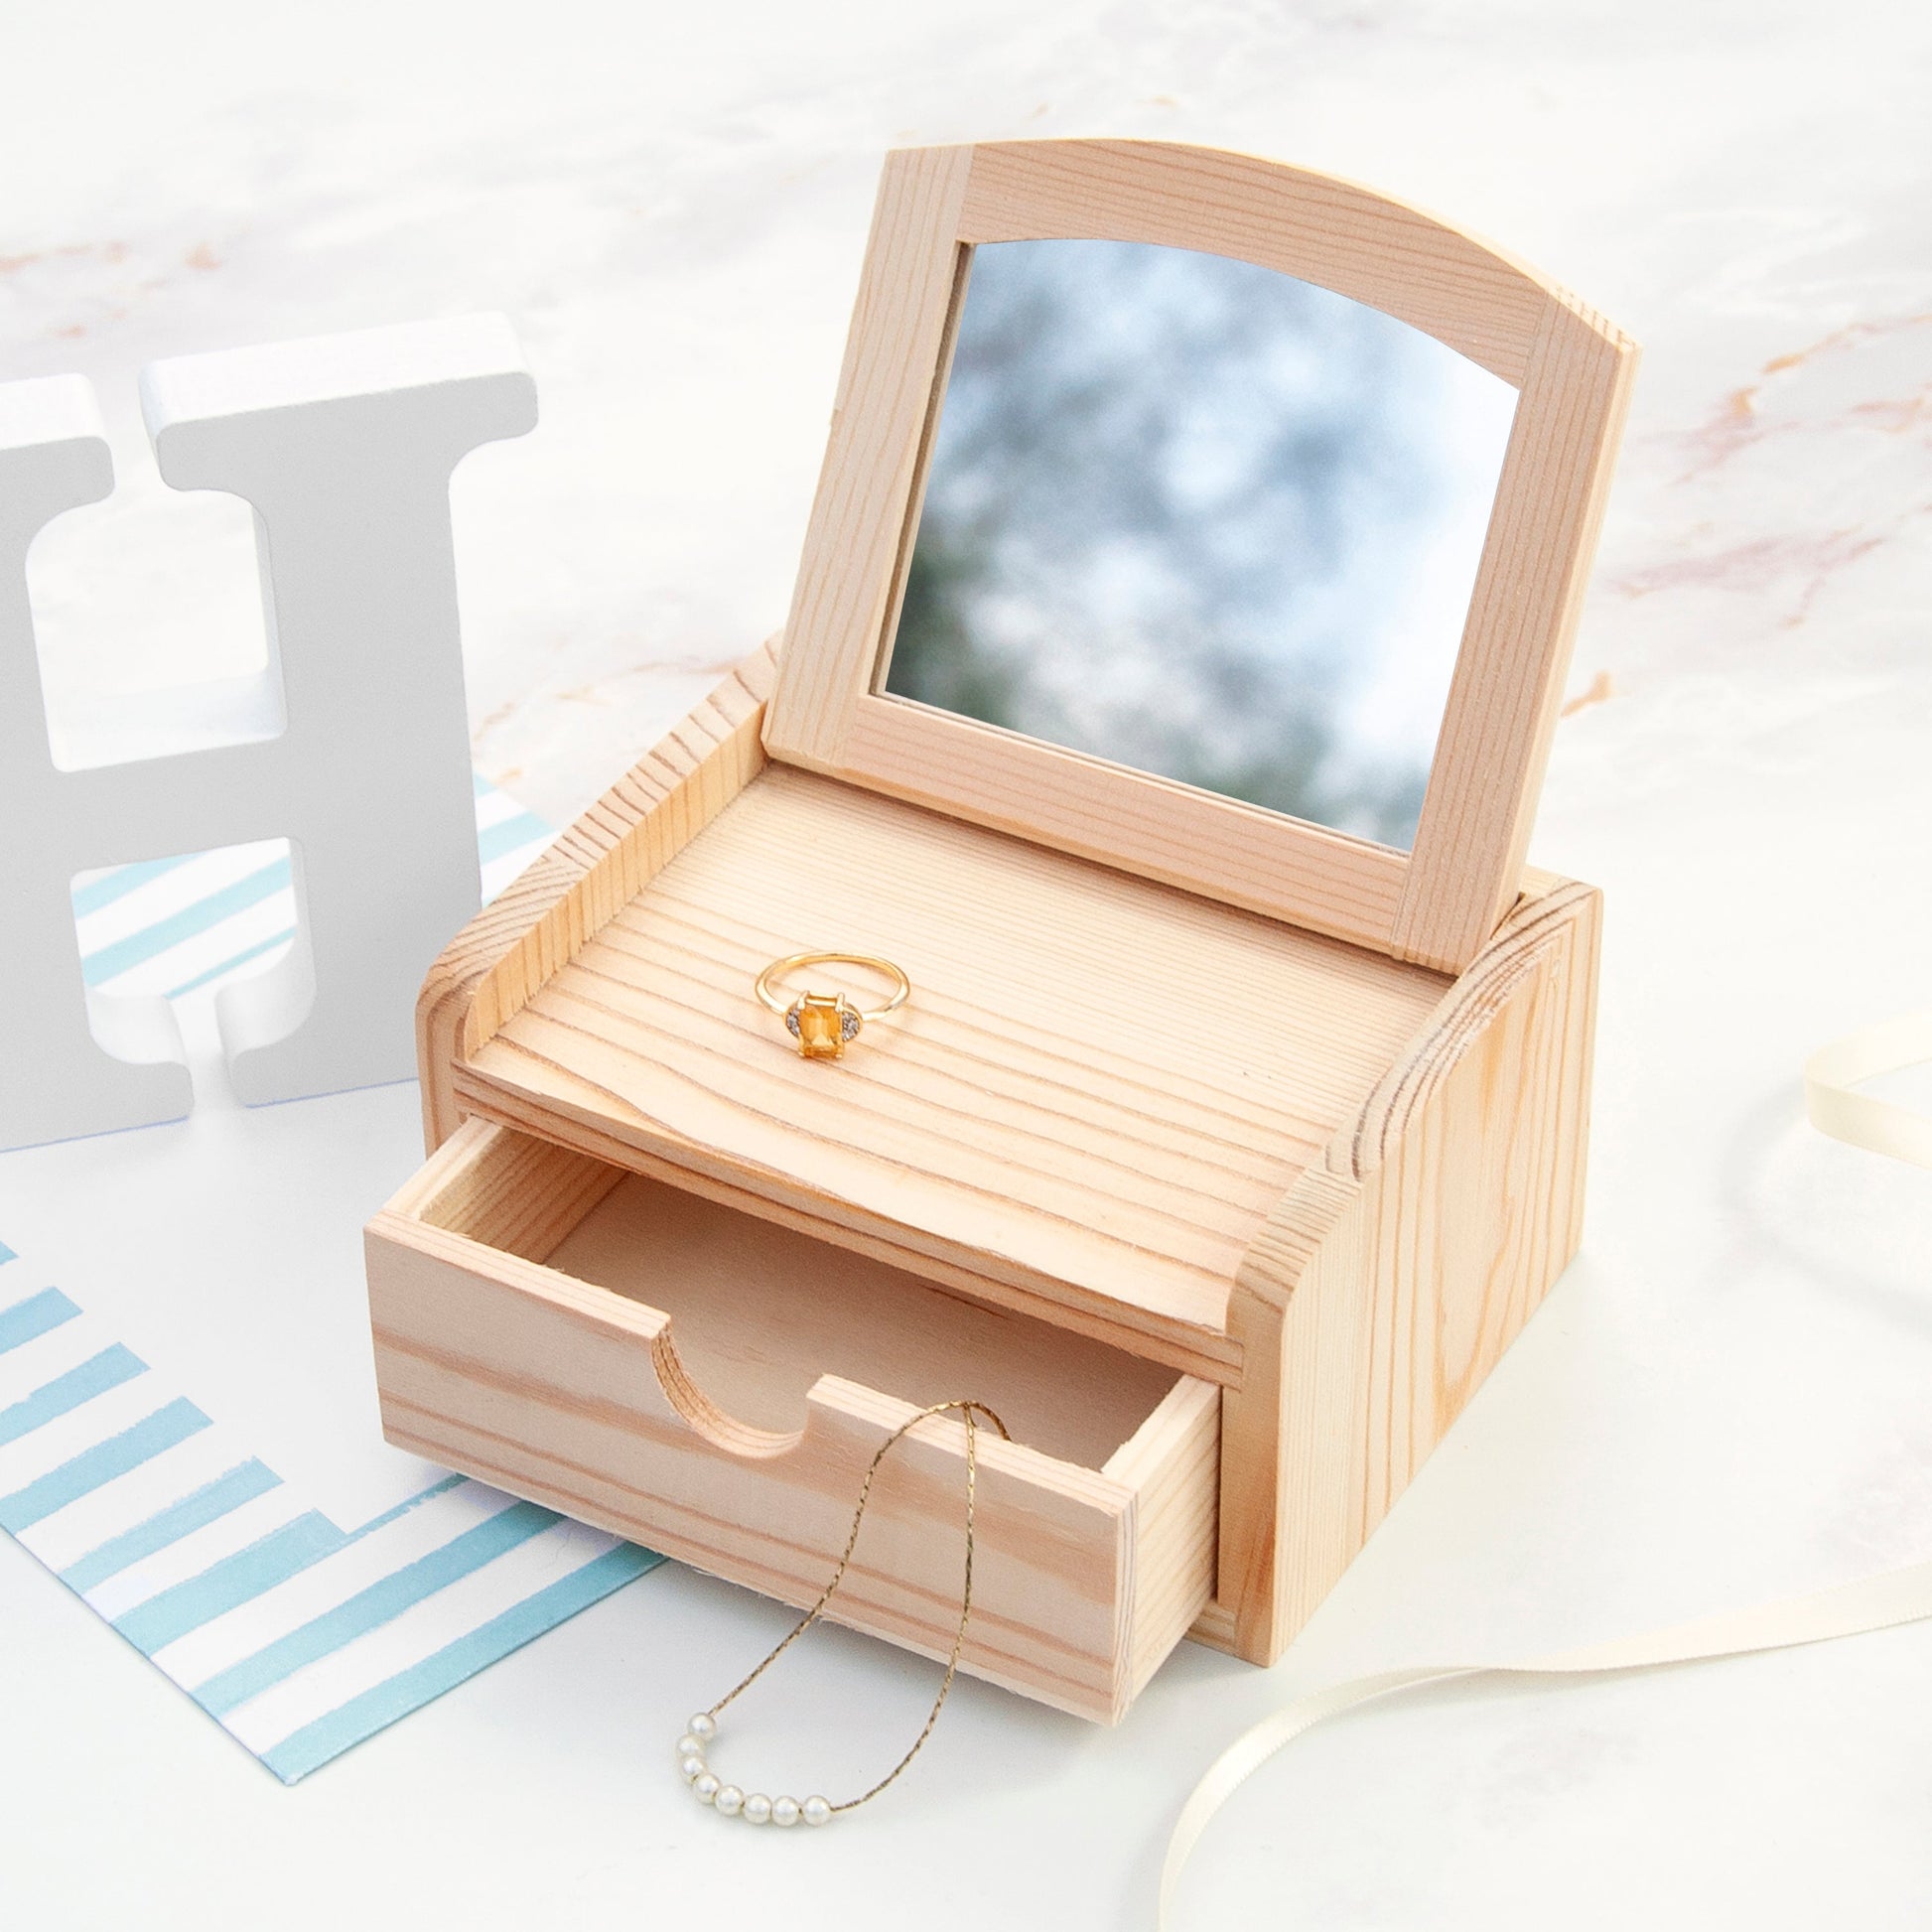 Personalized Jewellery Boxes & Storage - Personalized Kid’s Flower Jewellery Box 